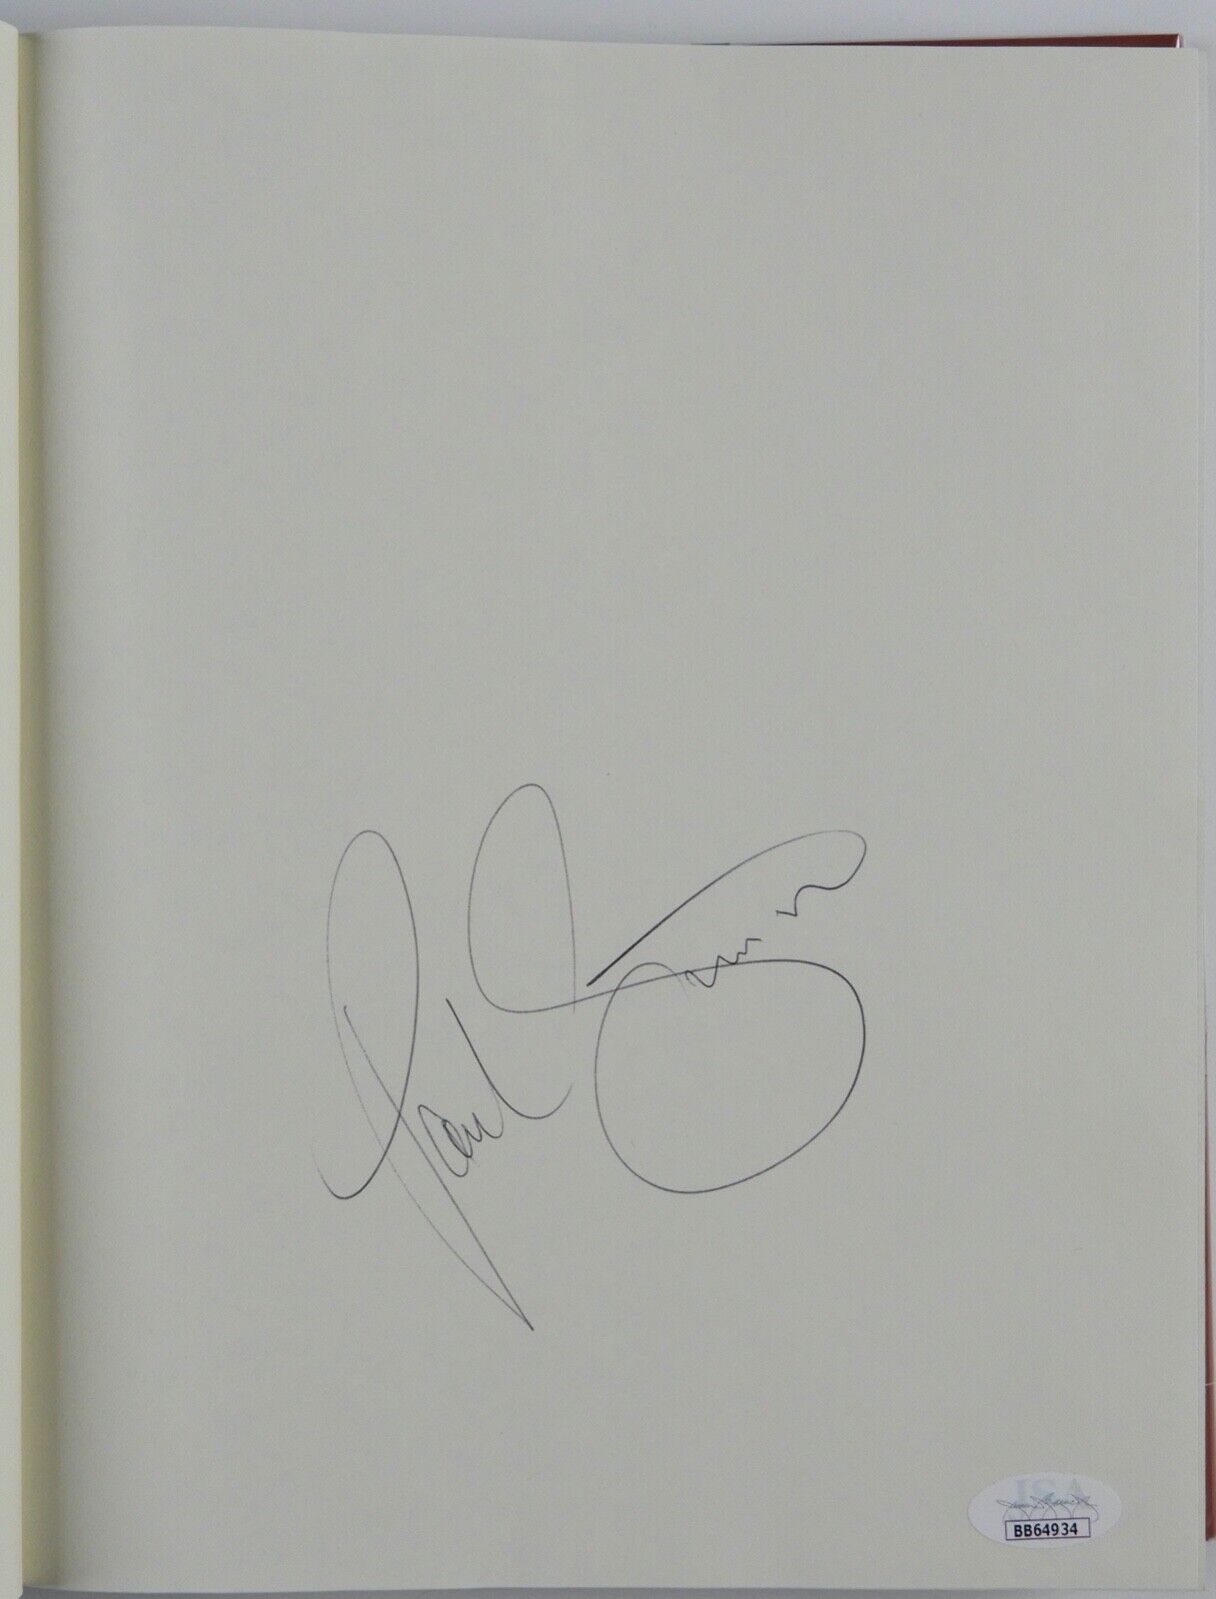 Paul Simon JSA Autograph Signed Book Lyrics 1964 - 2008